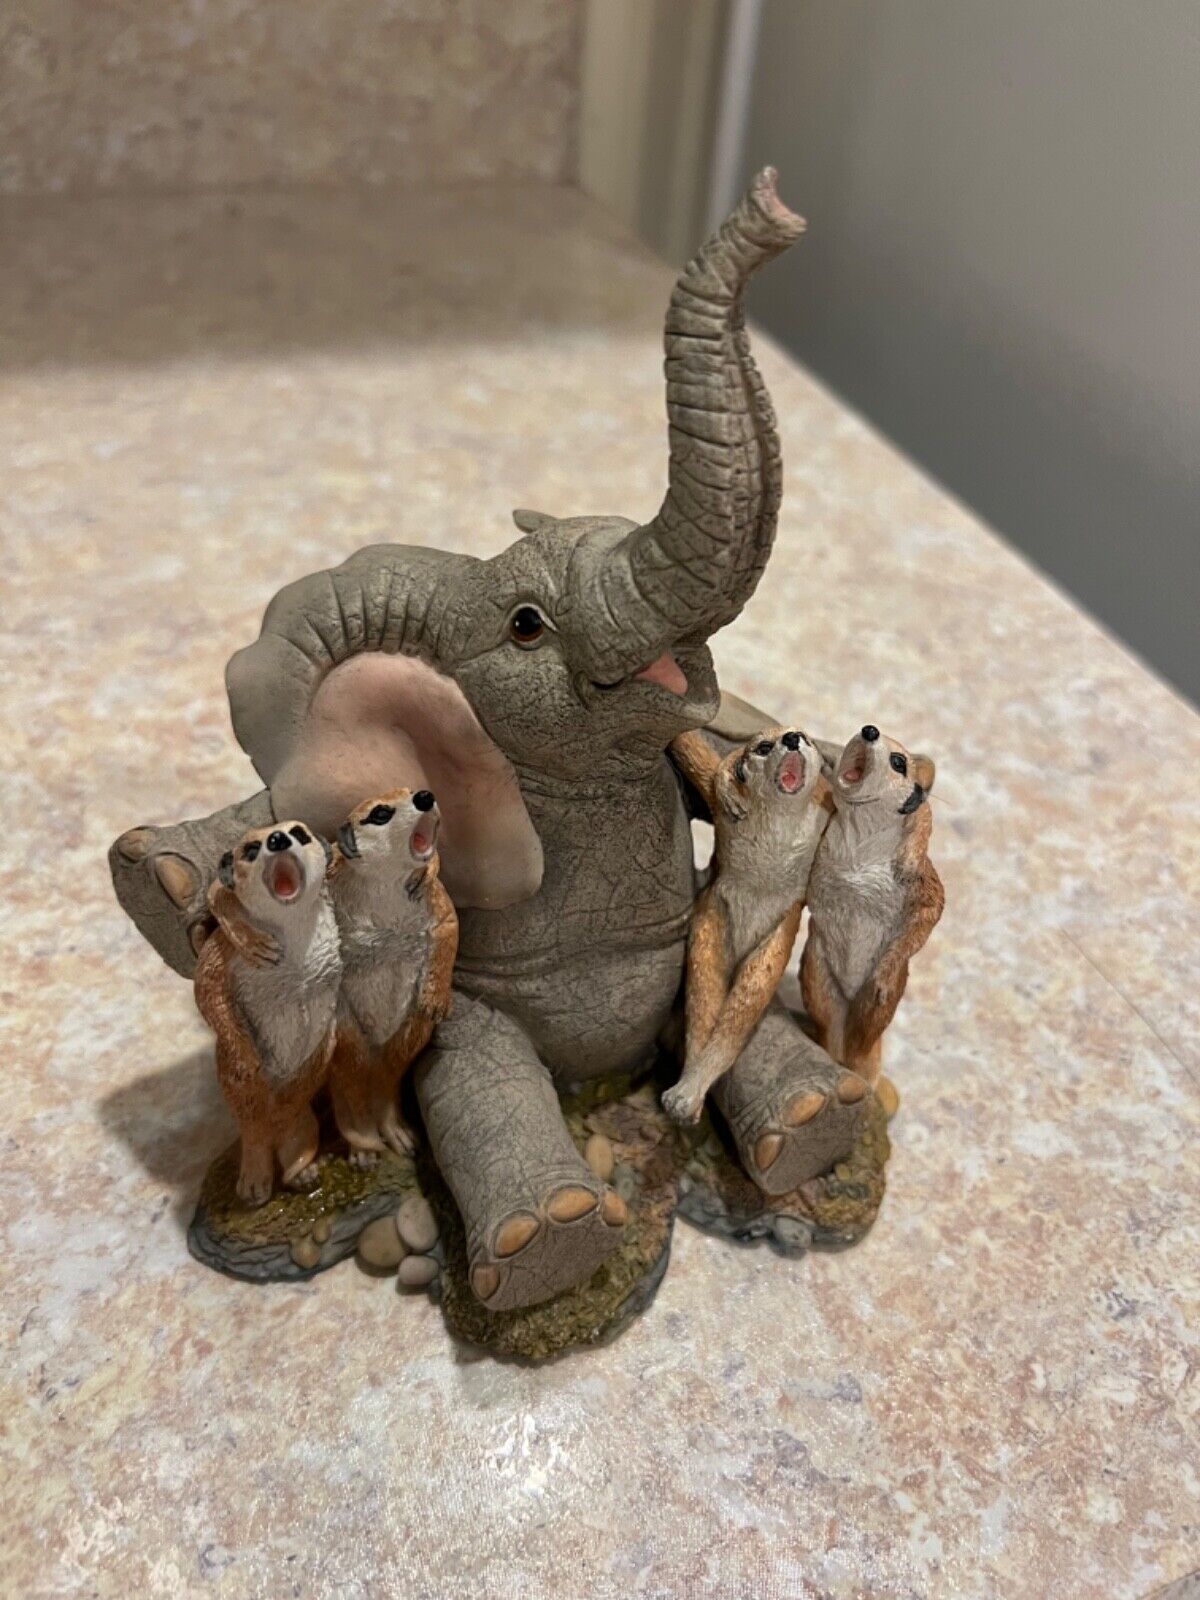 Tuskers Henry & Friends elephant meerkat figurine singing Kats Chorus